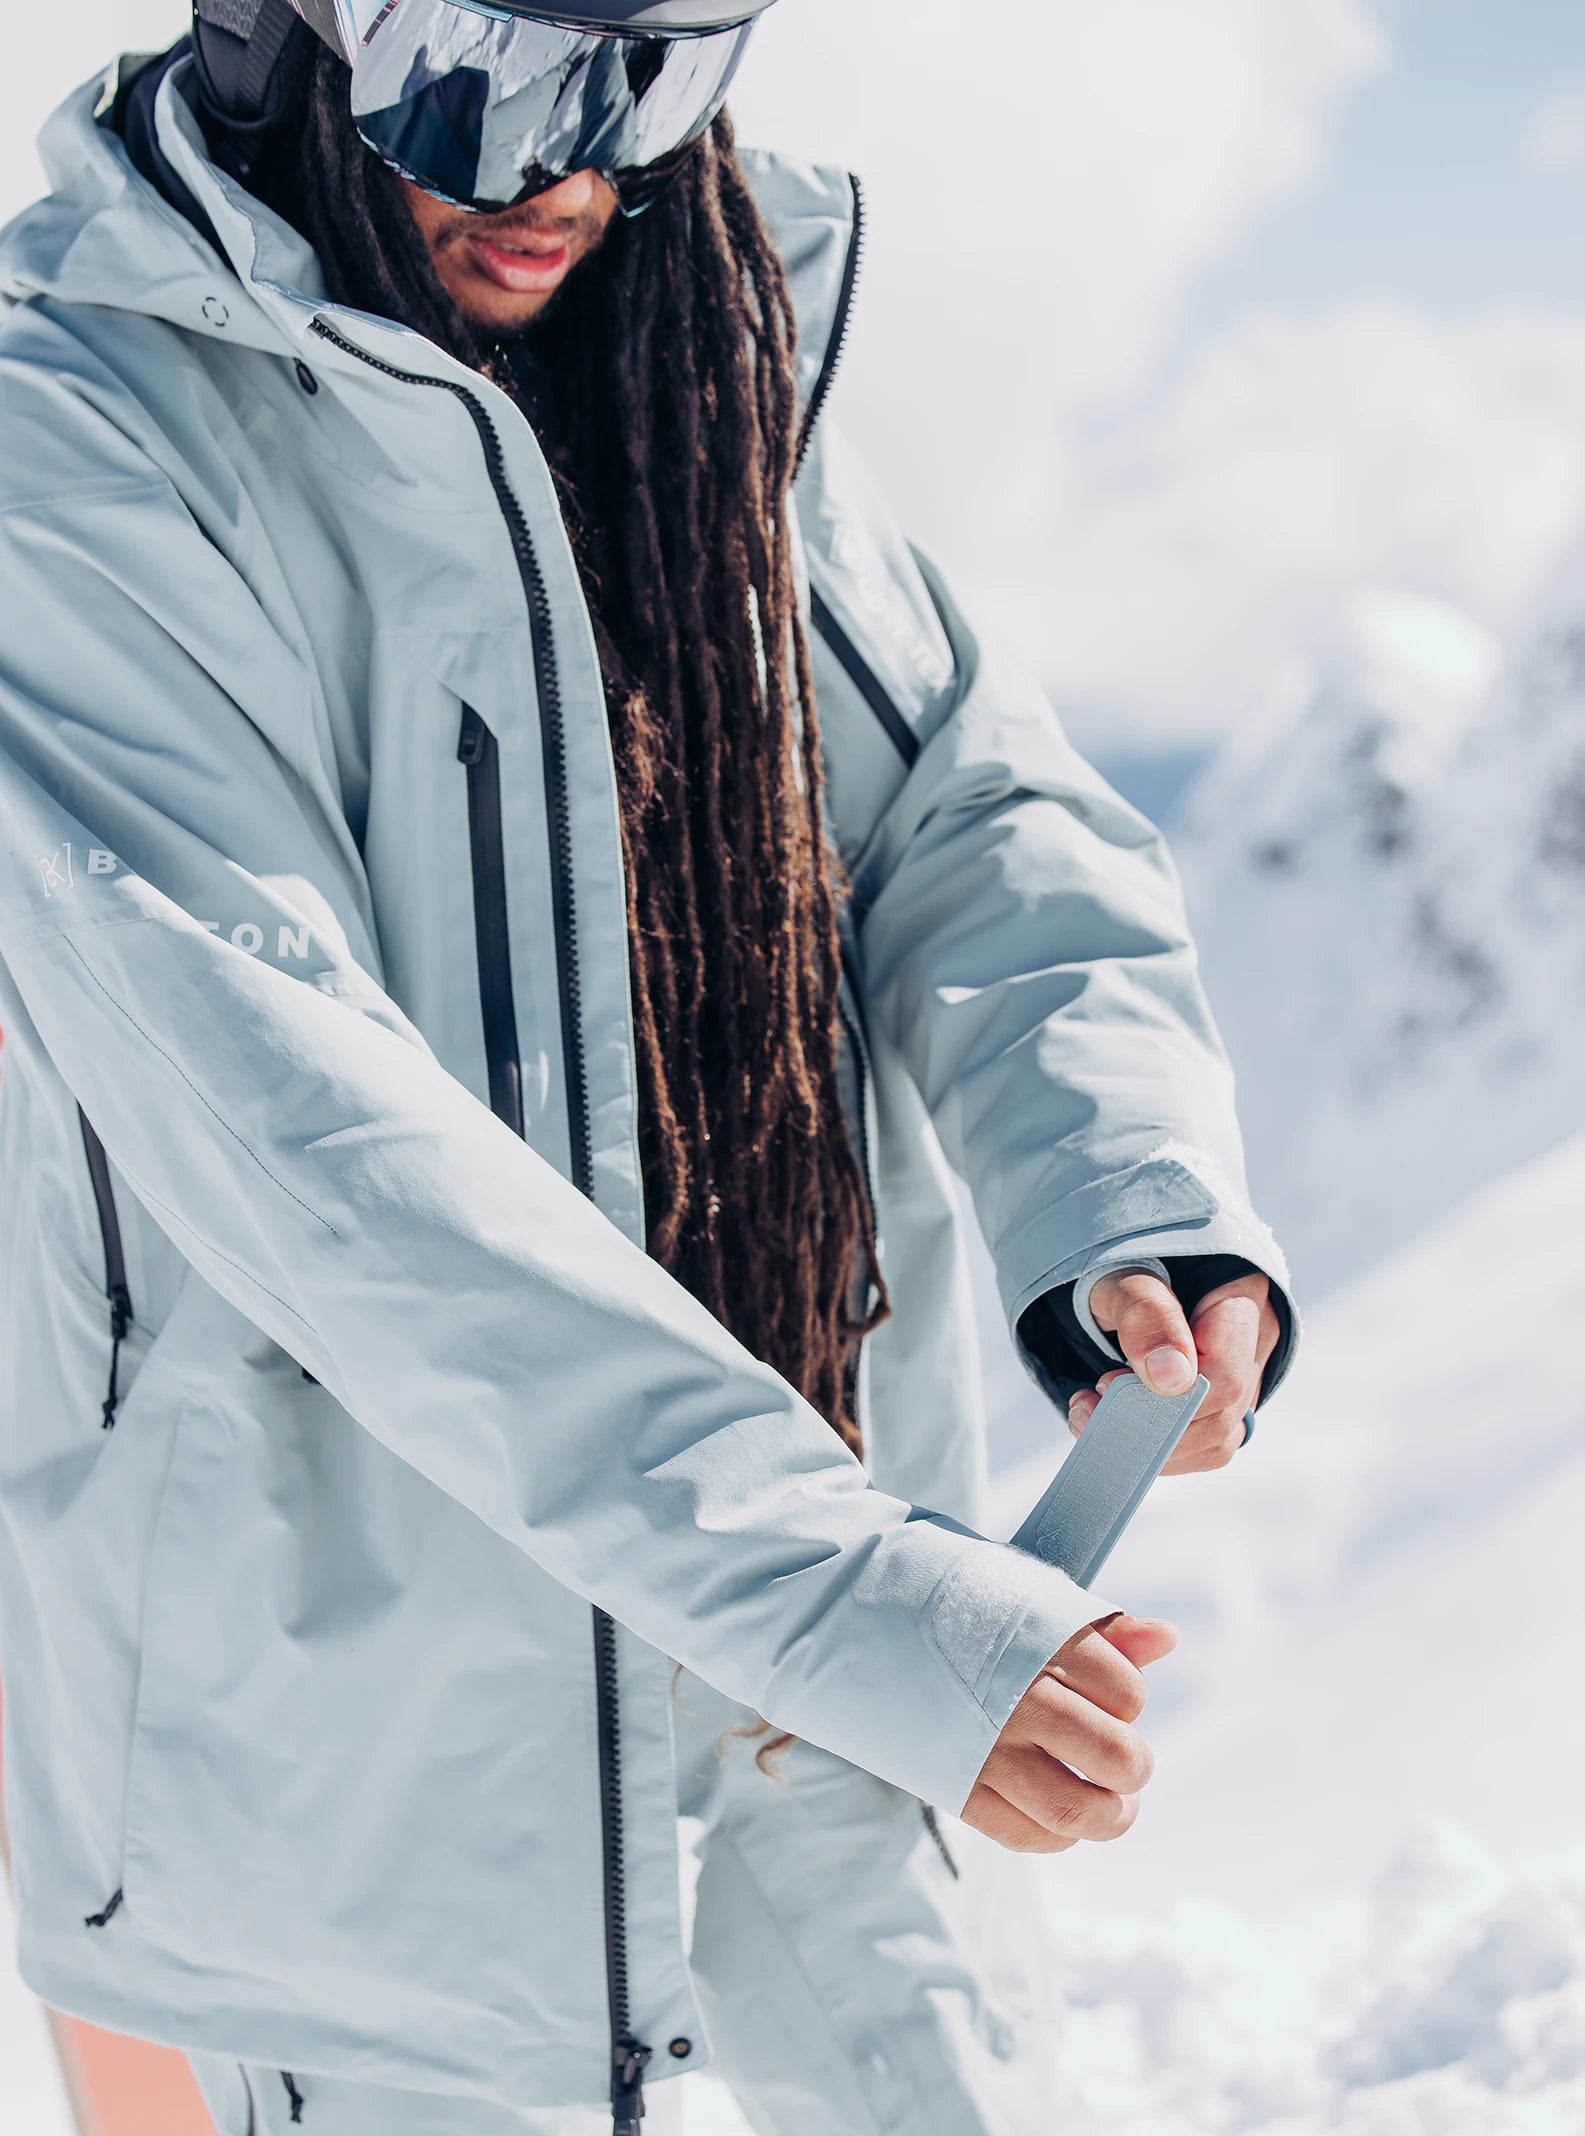 Men's Burton Snowboard Jackets & Winter Coats